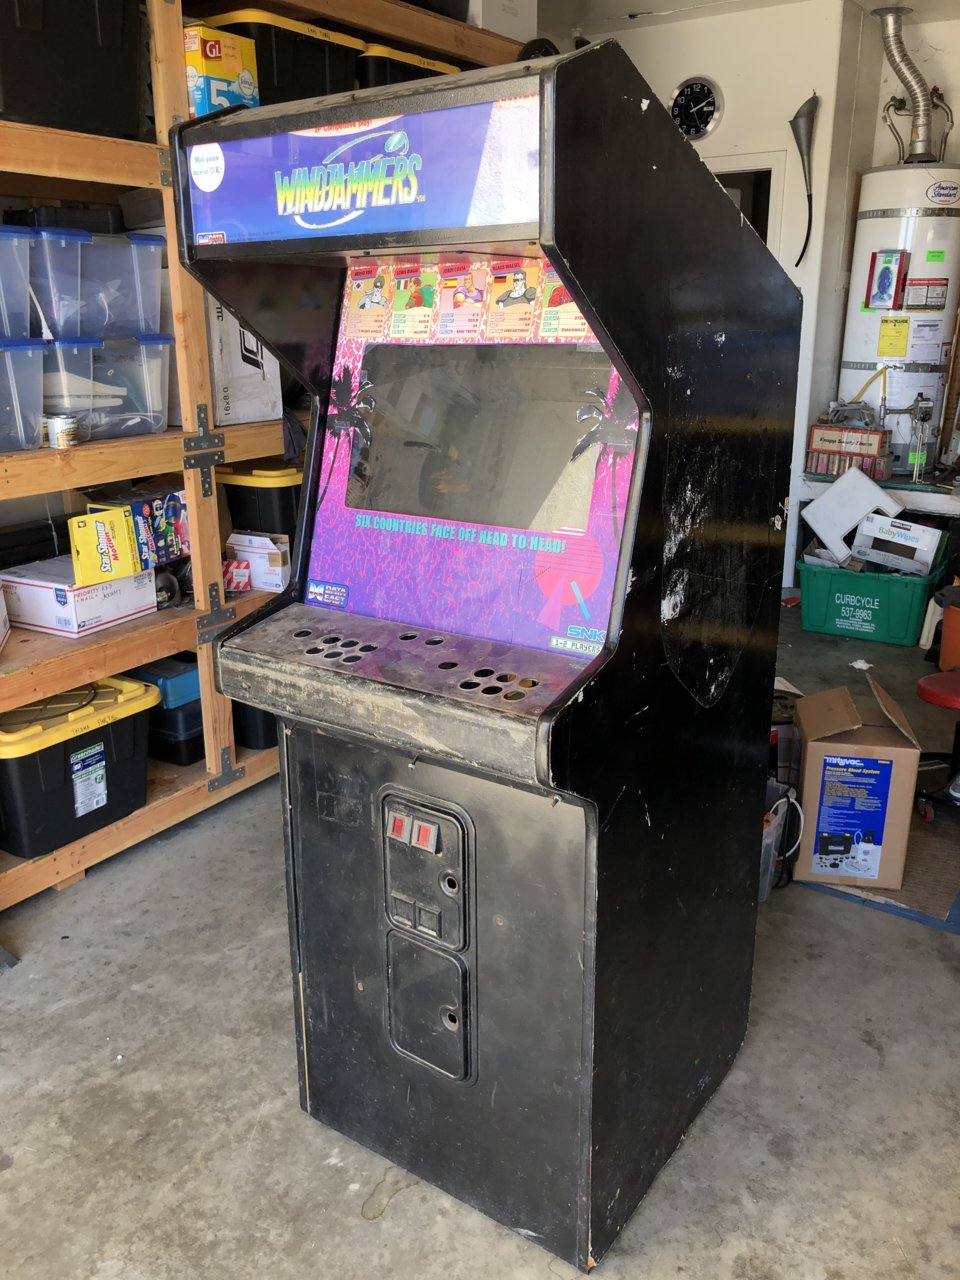 1993 Atari Arcade Cabinet Restoration 3 Week Challenge Tacoma